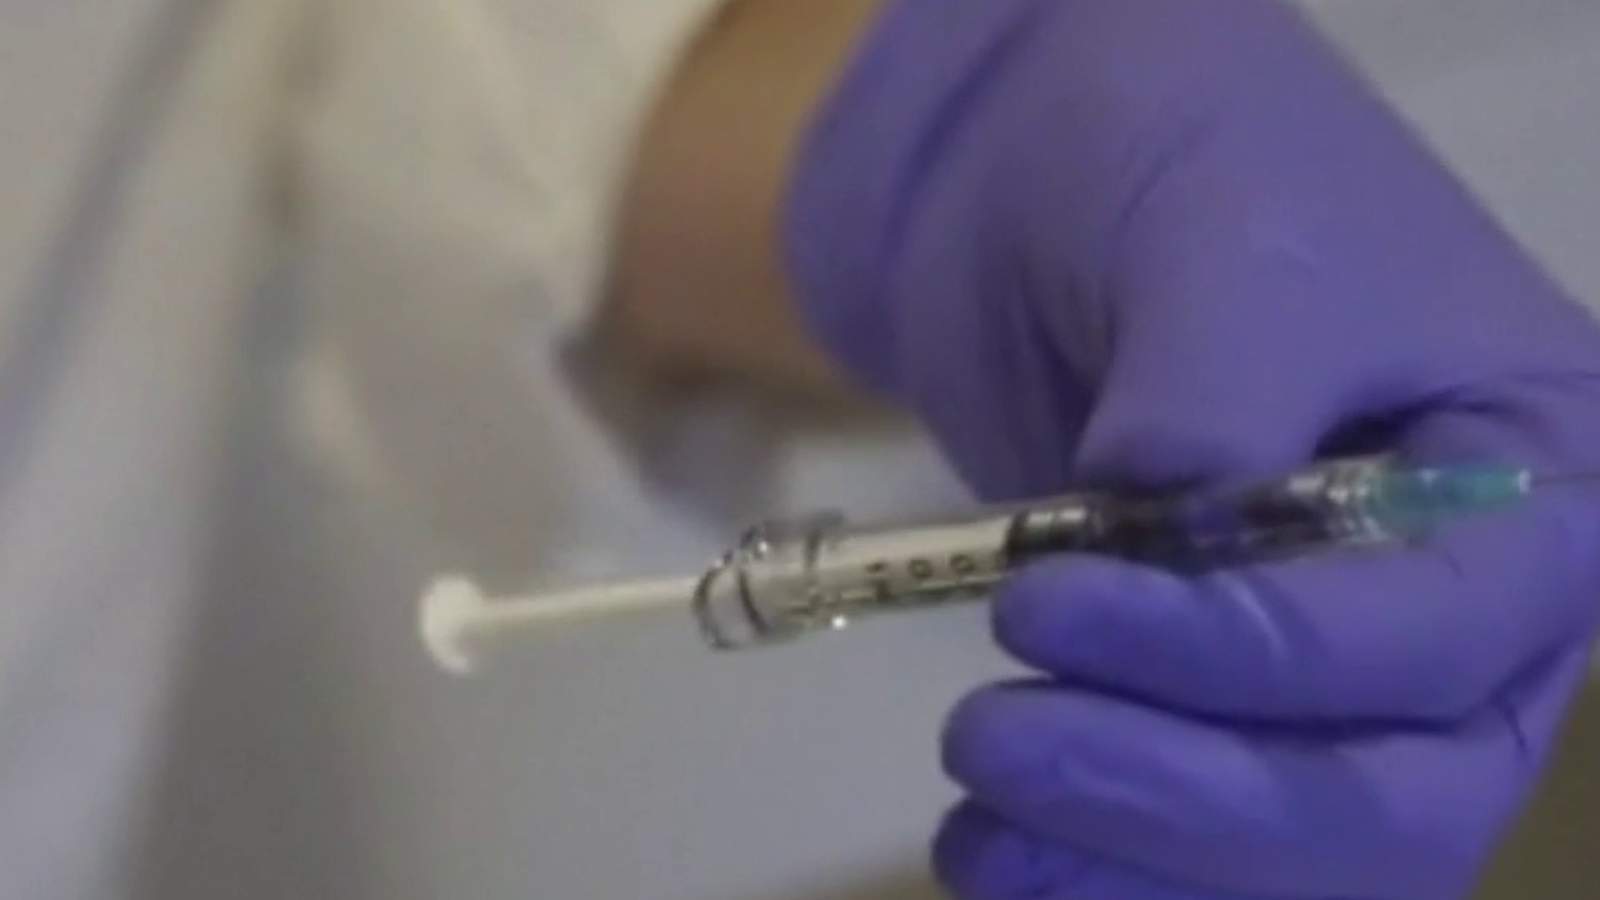 FDA finds Johnson & Johnson vaccine effectively prevents COVID